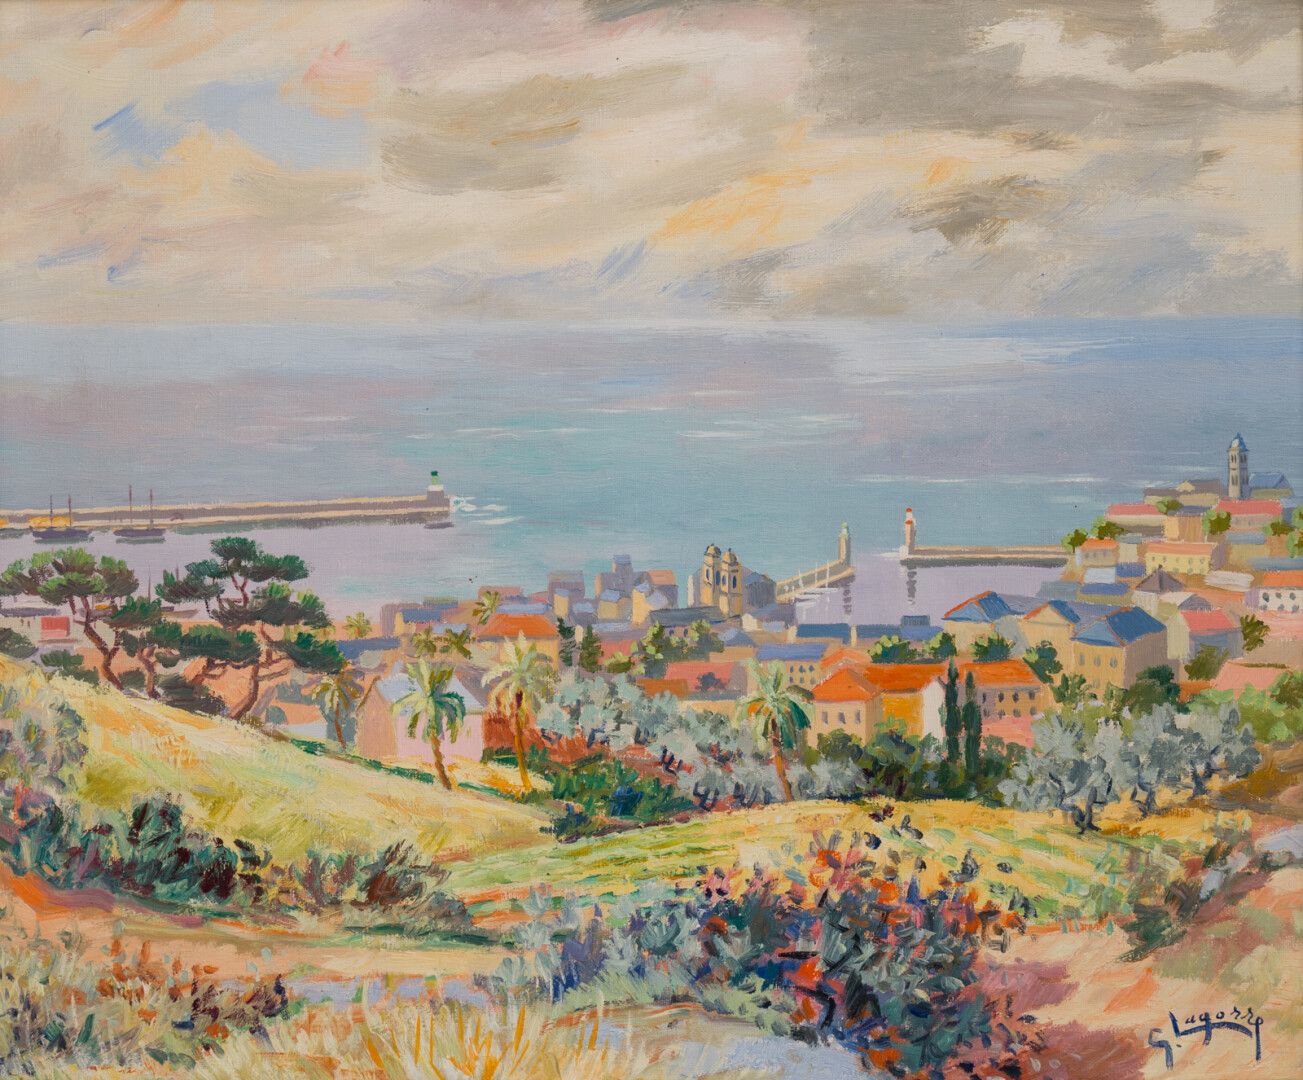 Null 勒内-加斯东-拉戈尔(1913-2004)

东方主义港口

布面油画，右下角有签名

46 x 55厘米。